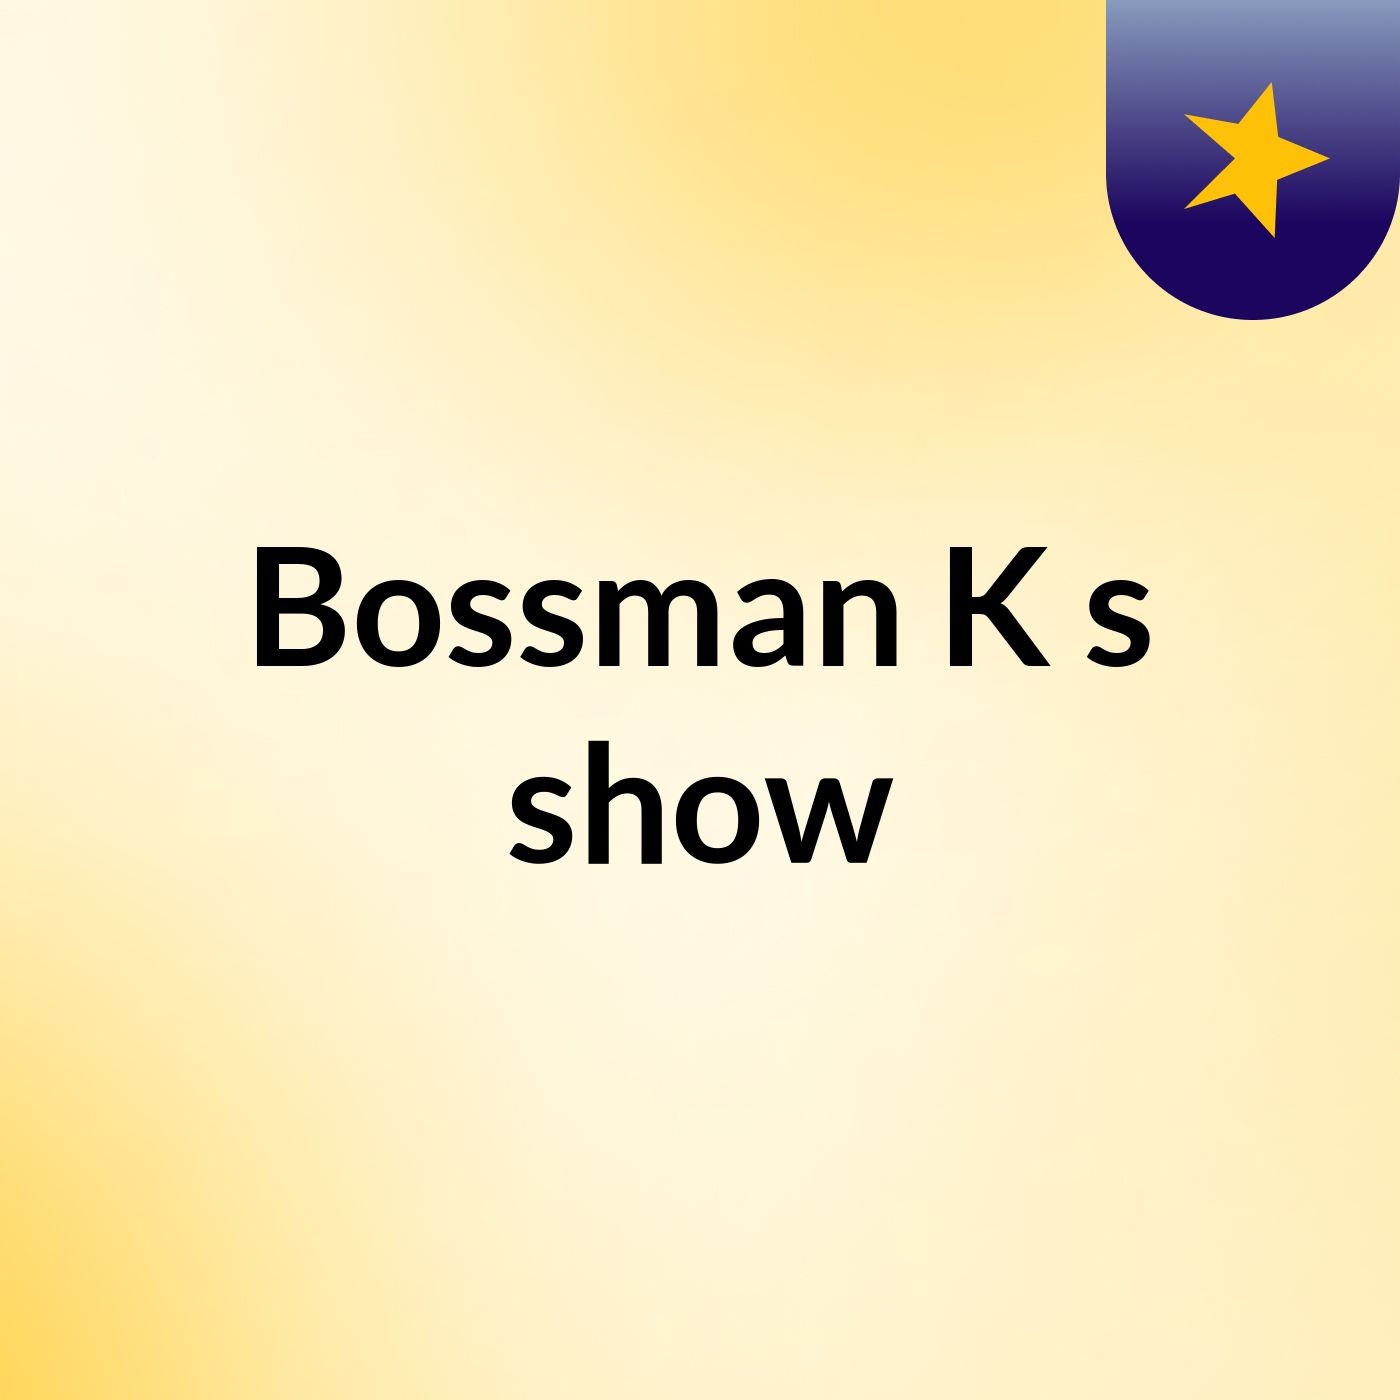 Bossman K's show